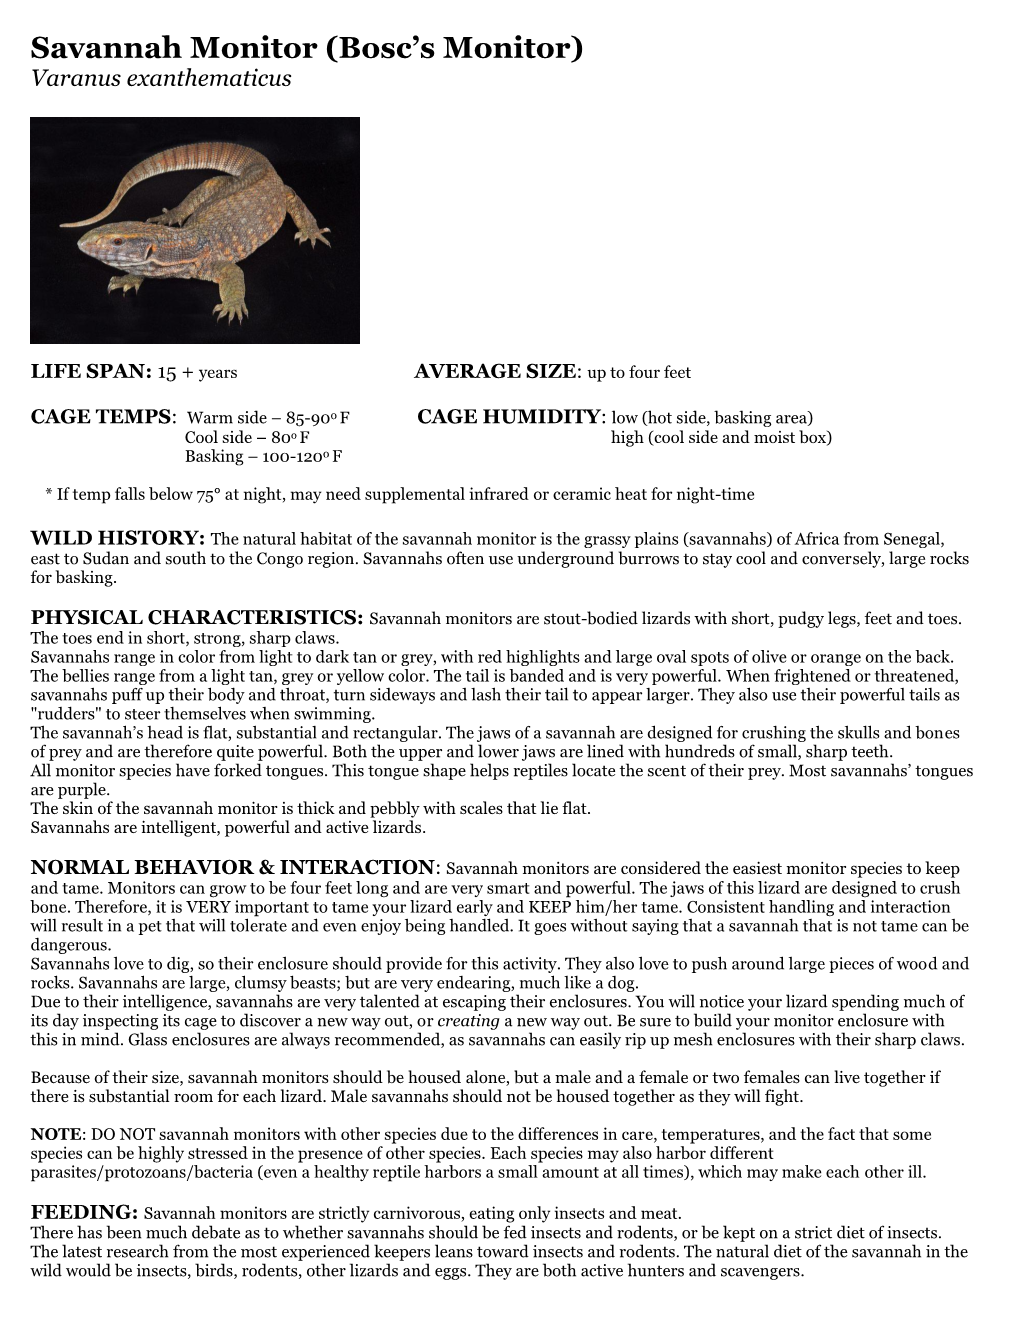 Savannah Monitor (Bosc’S Monitor) Varanus Exanthematicus